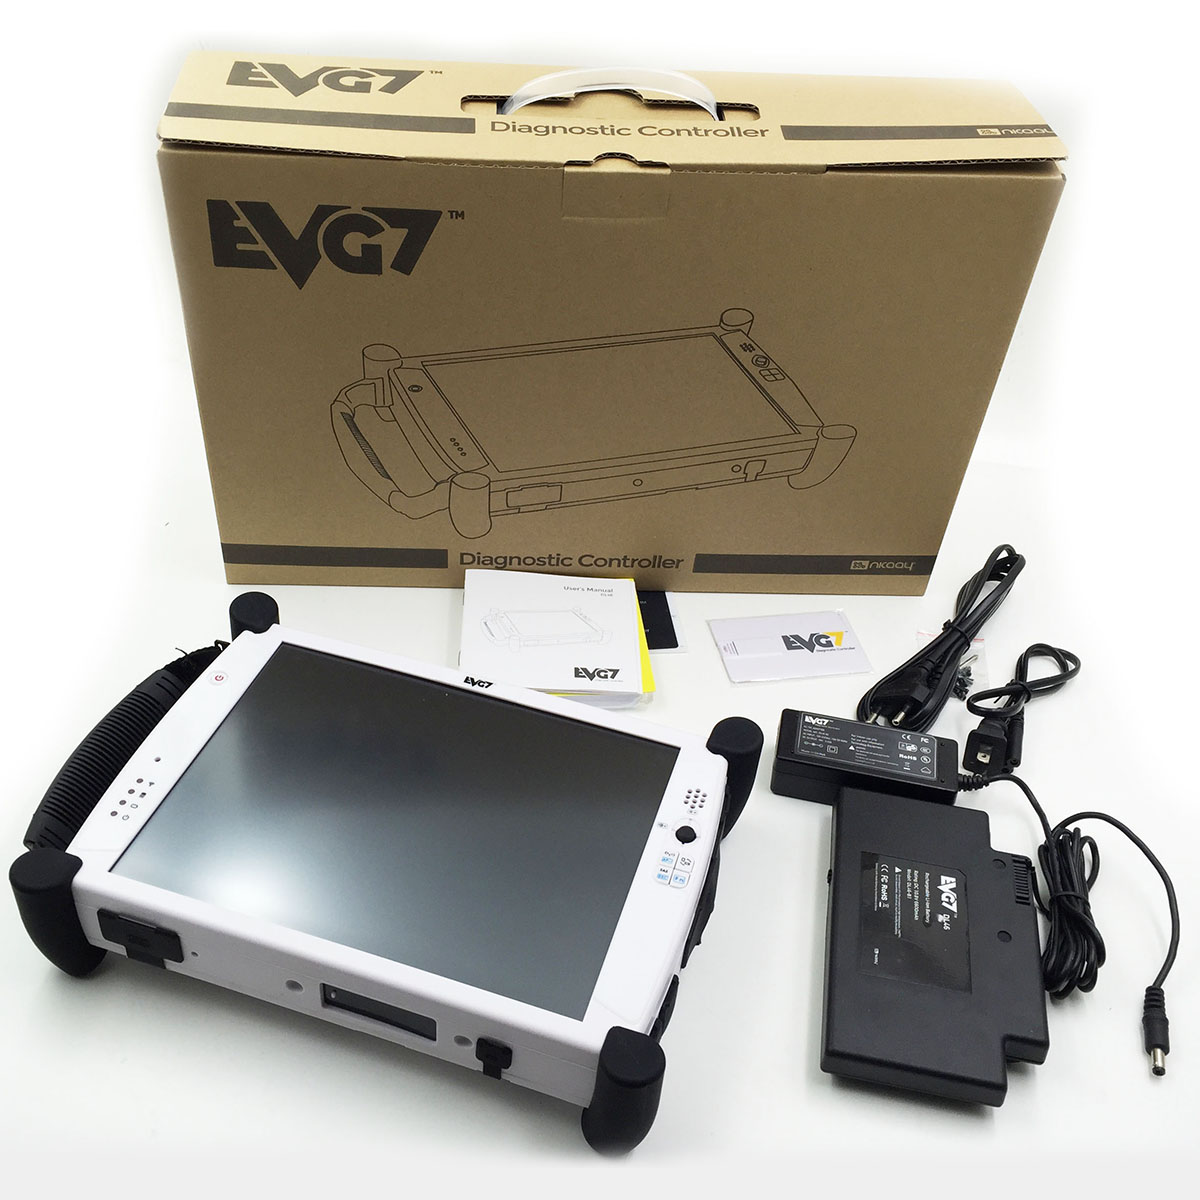 evg7-diagnostic-controller-tablet-pc-dl46-white